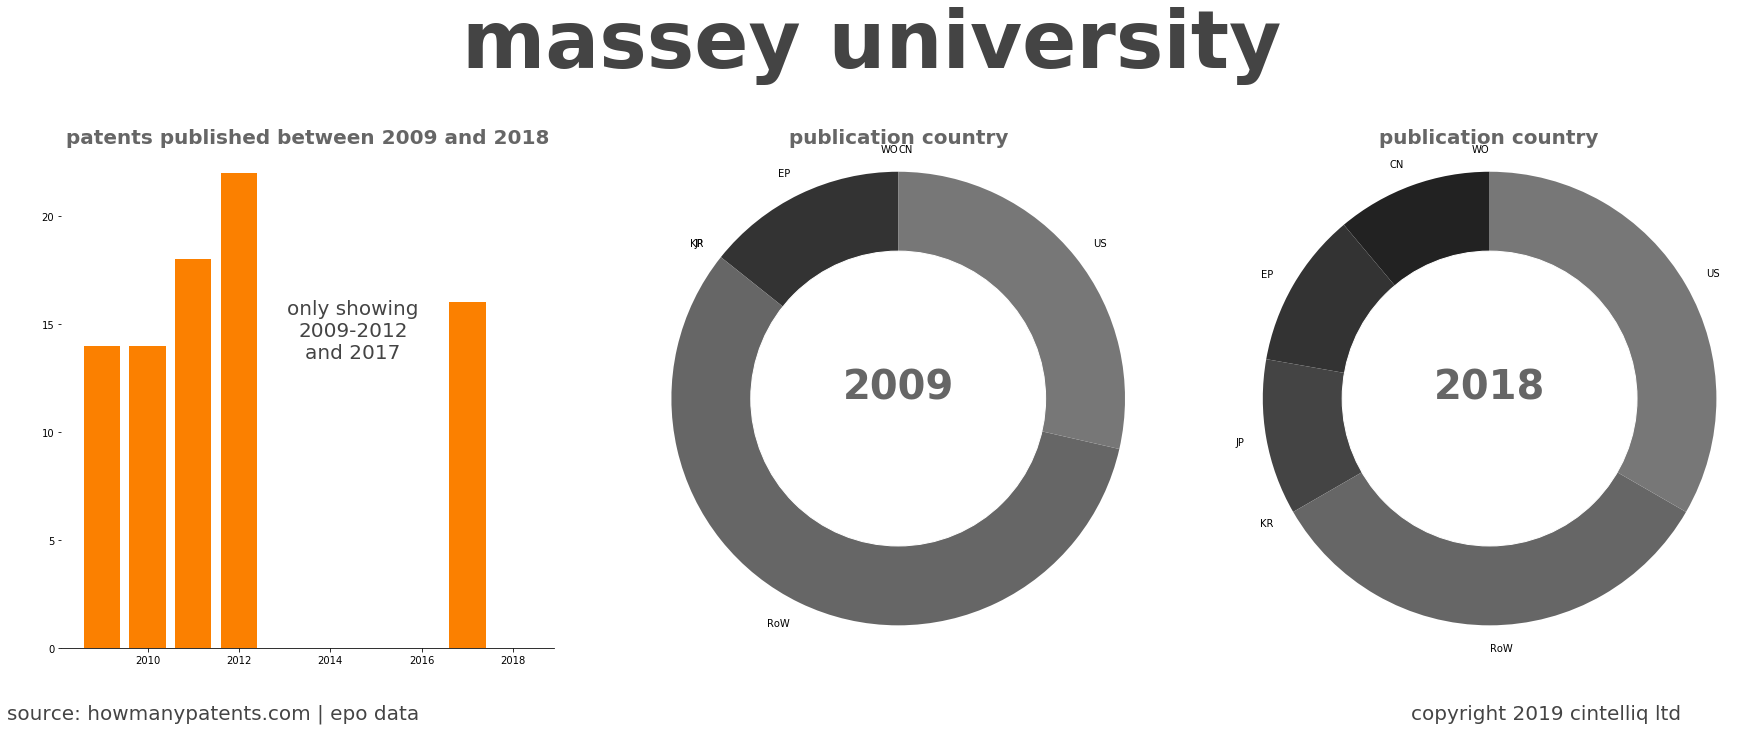 summary of patents for Massey University